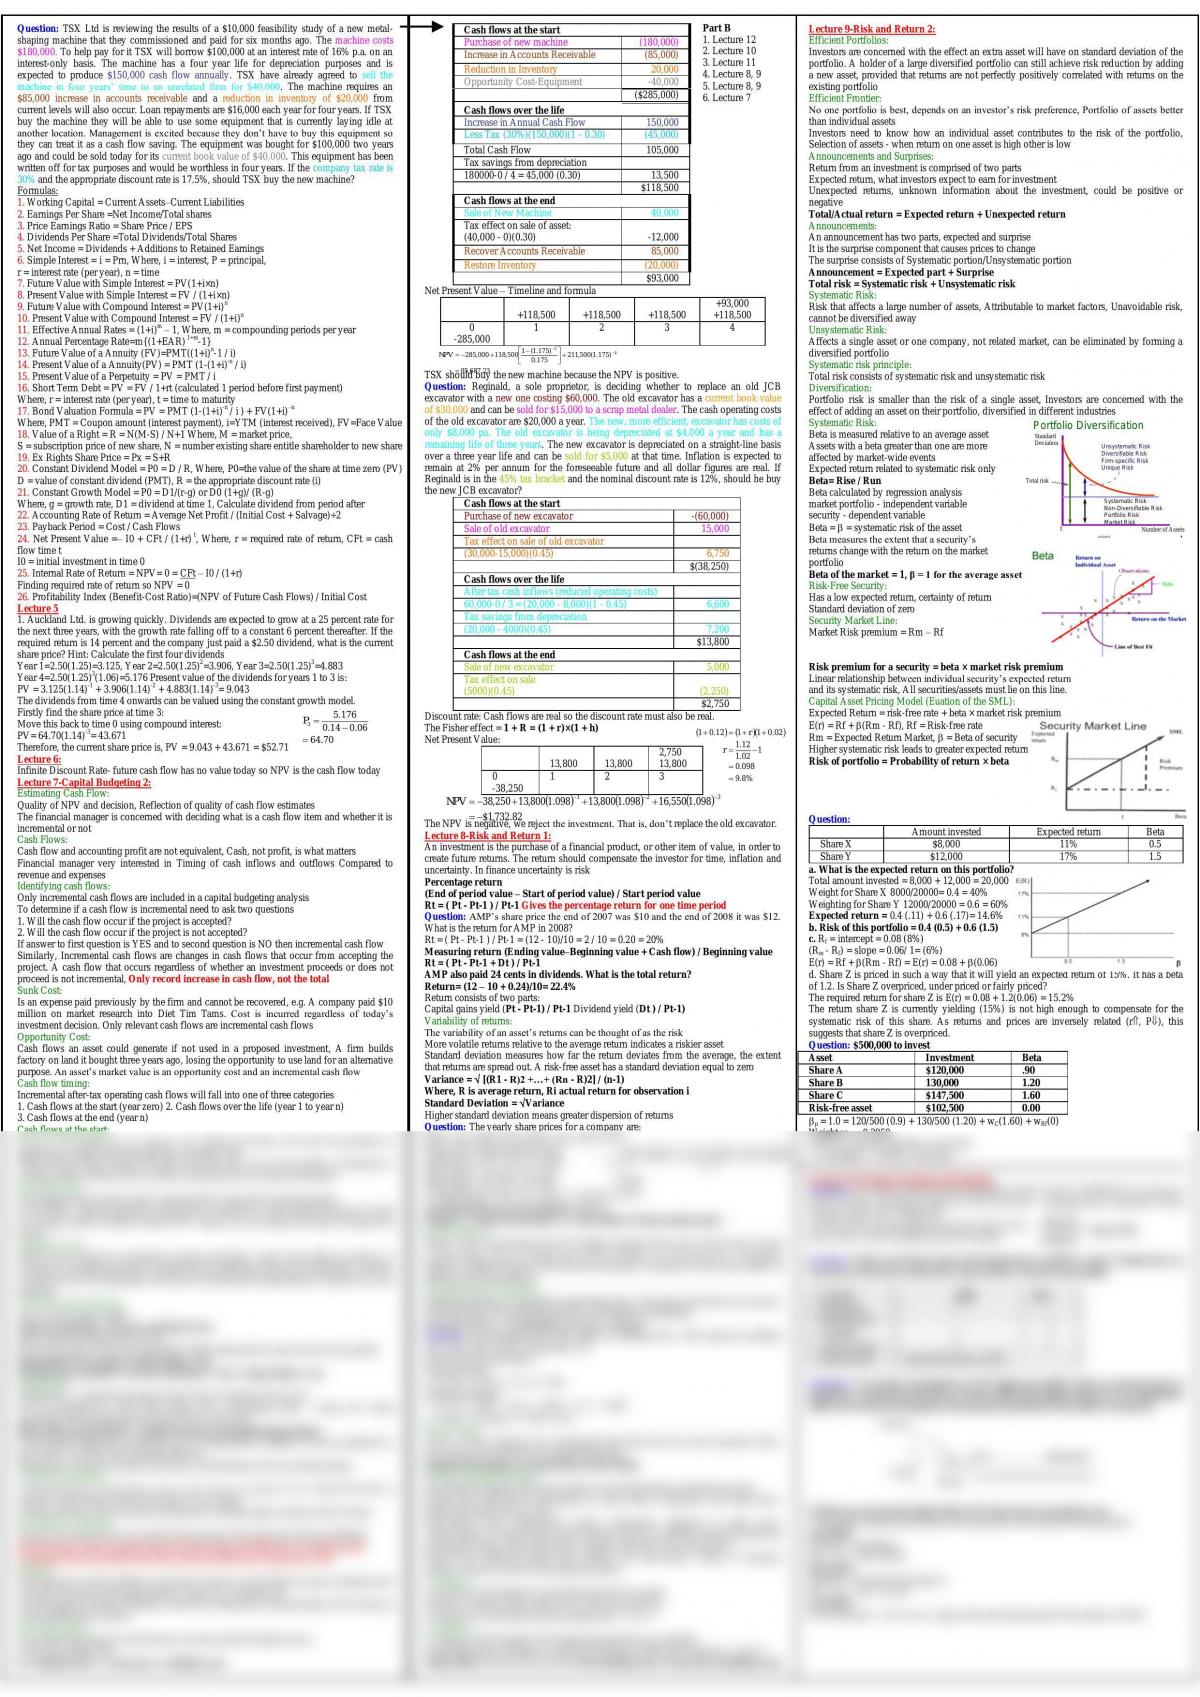 FBF Final Exam cheat sheet - Page 1